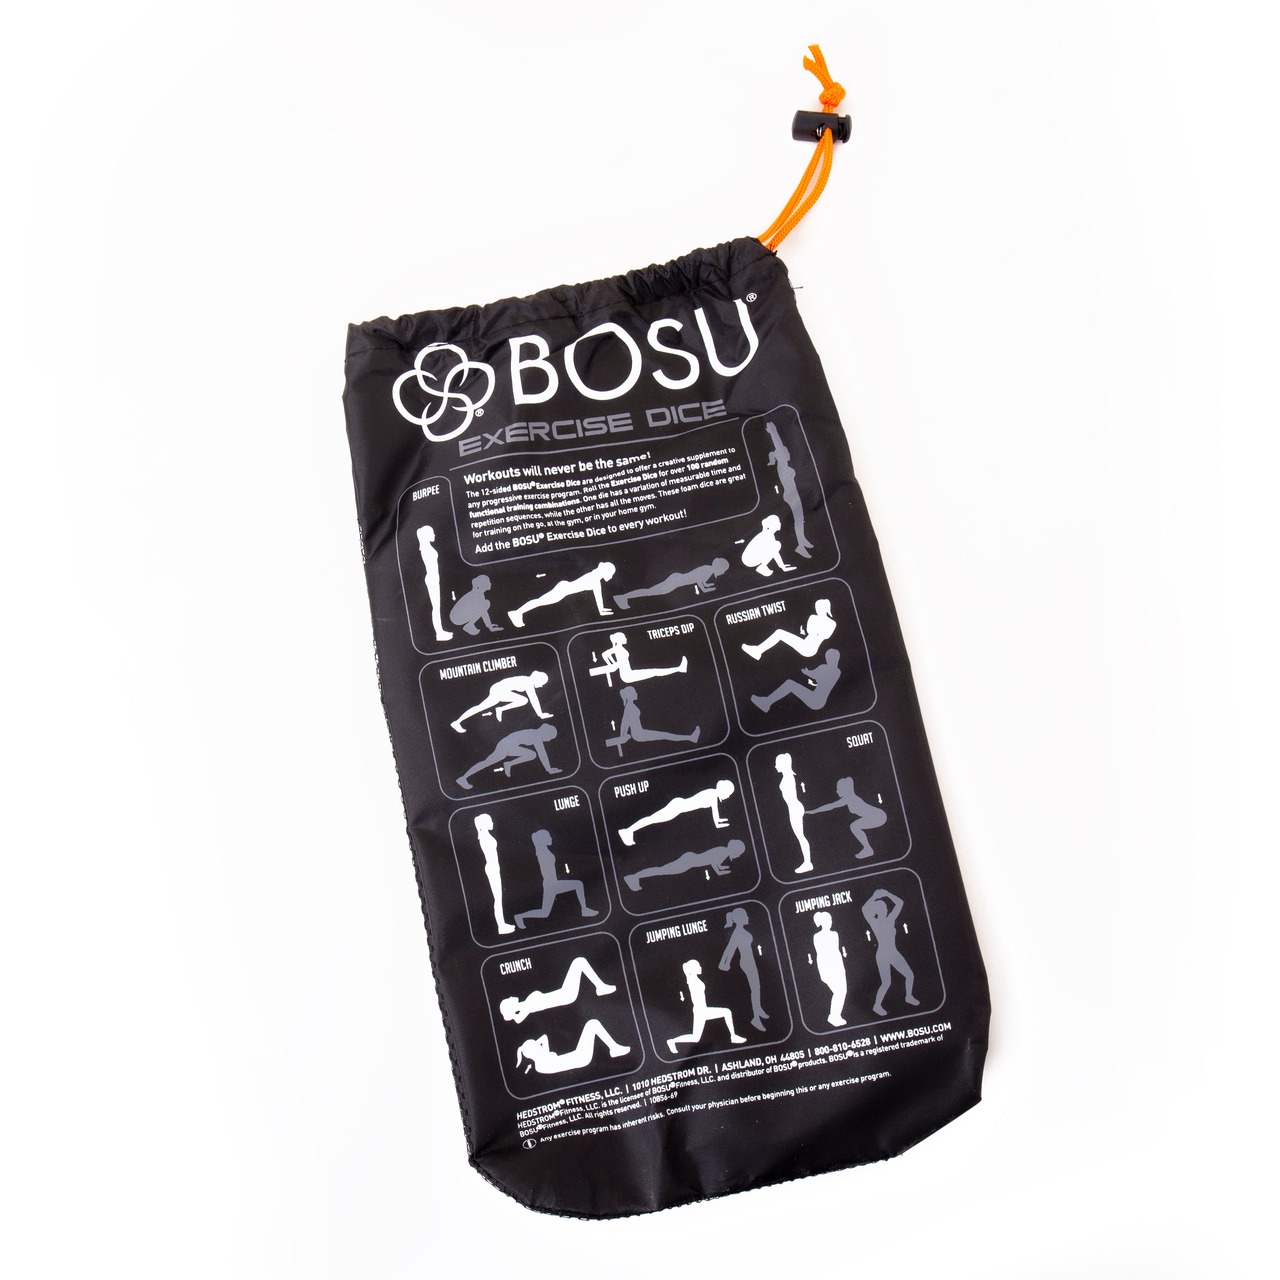 BOSU® Exercise Dice（ボス エクササイズ ダイス）BOSU Fitness 日本正規輸入代理店